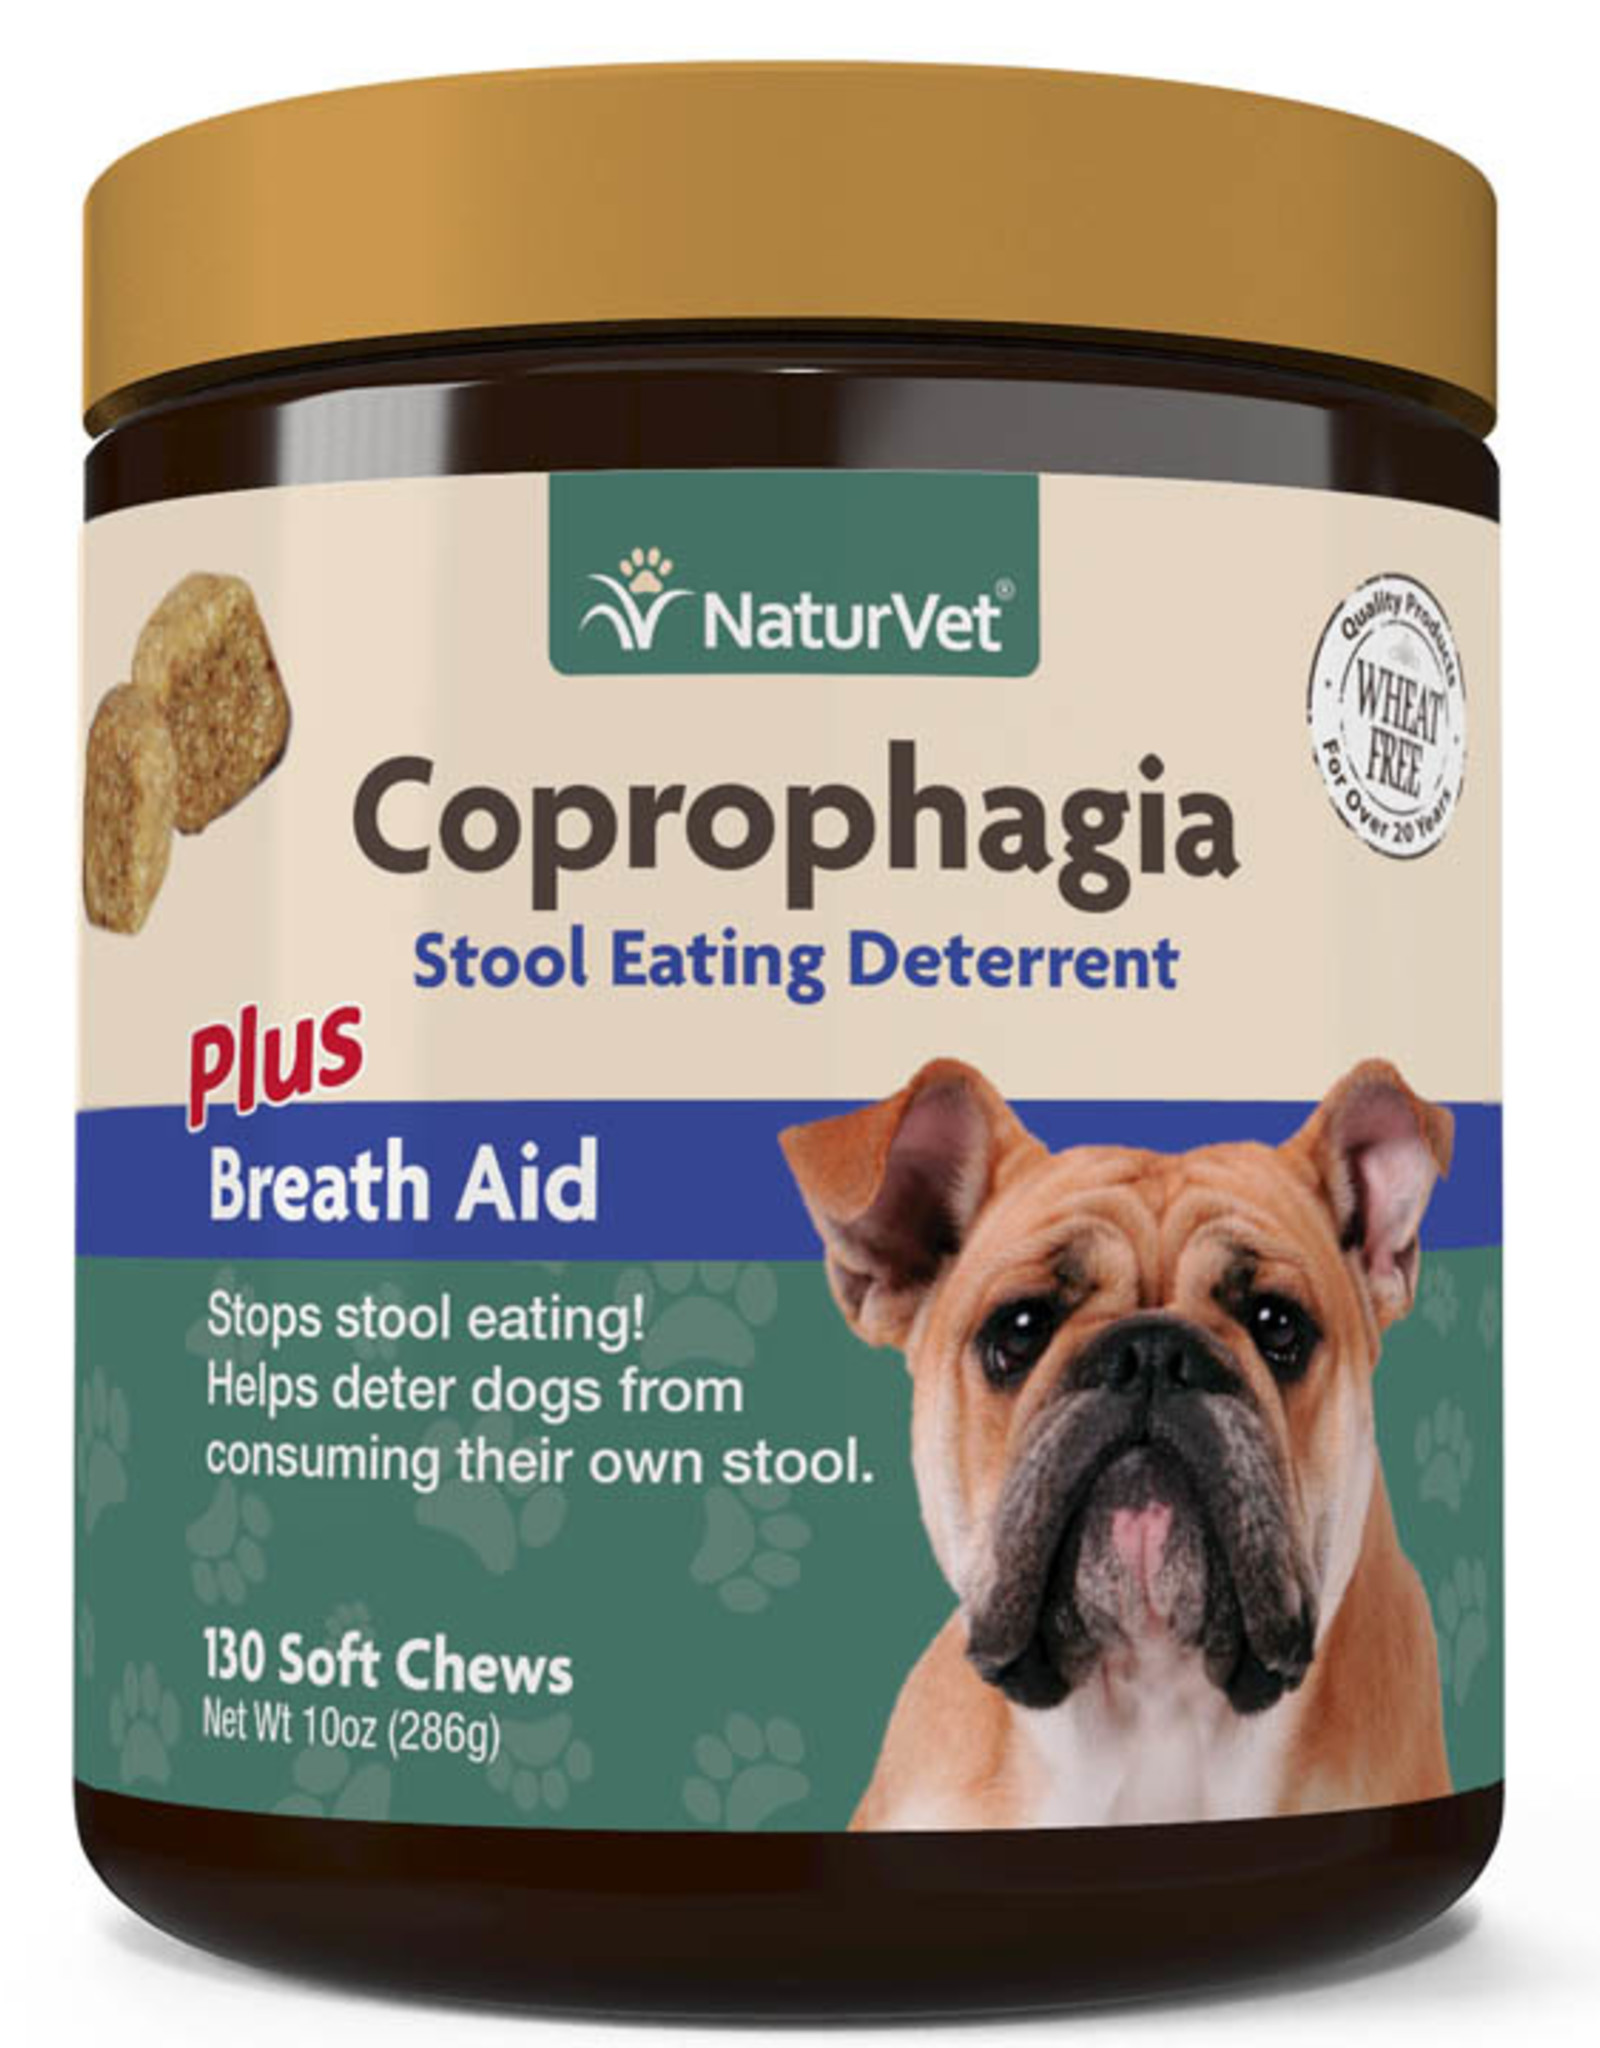 NATURVET NATURVET Coprophagia Stool Eating Deterrent Soft Chews 130CT